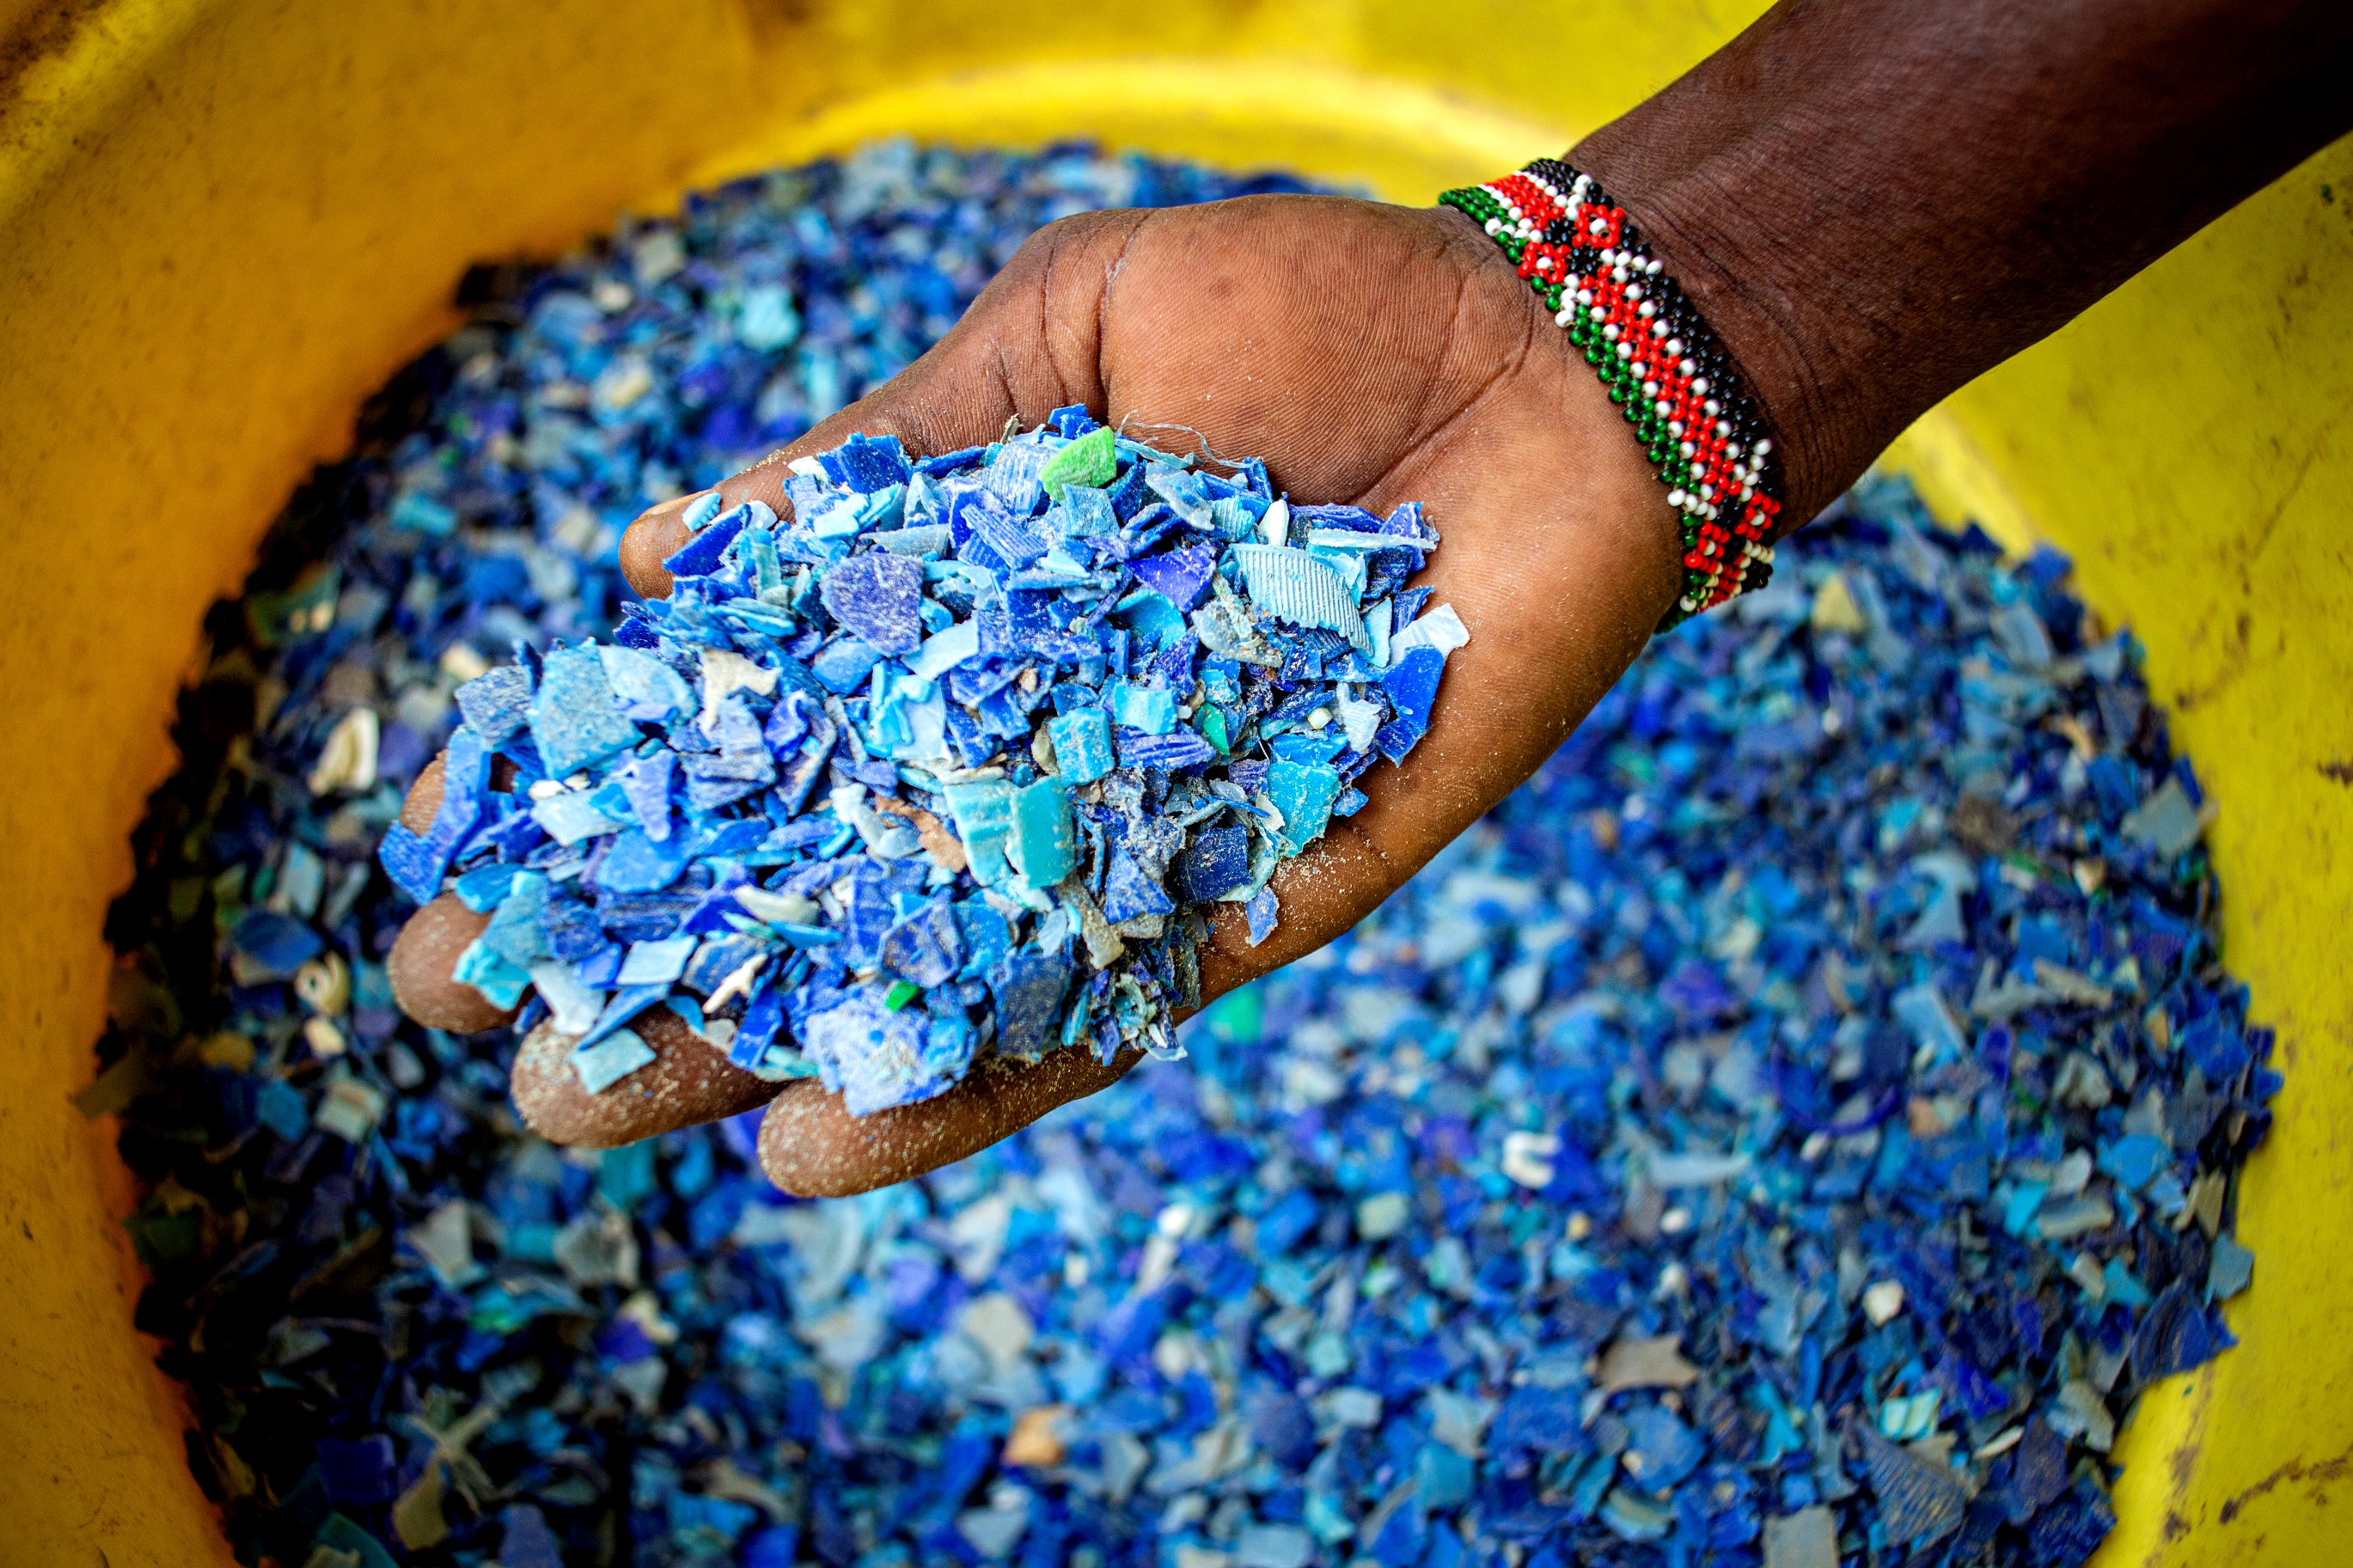 Machine-shredded plastic waste